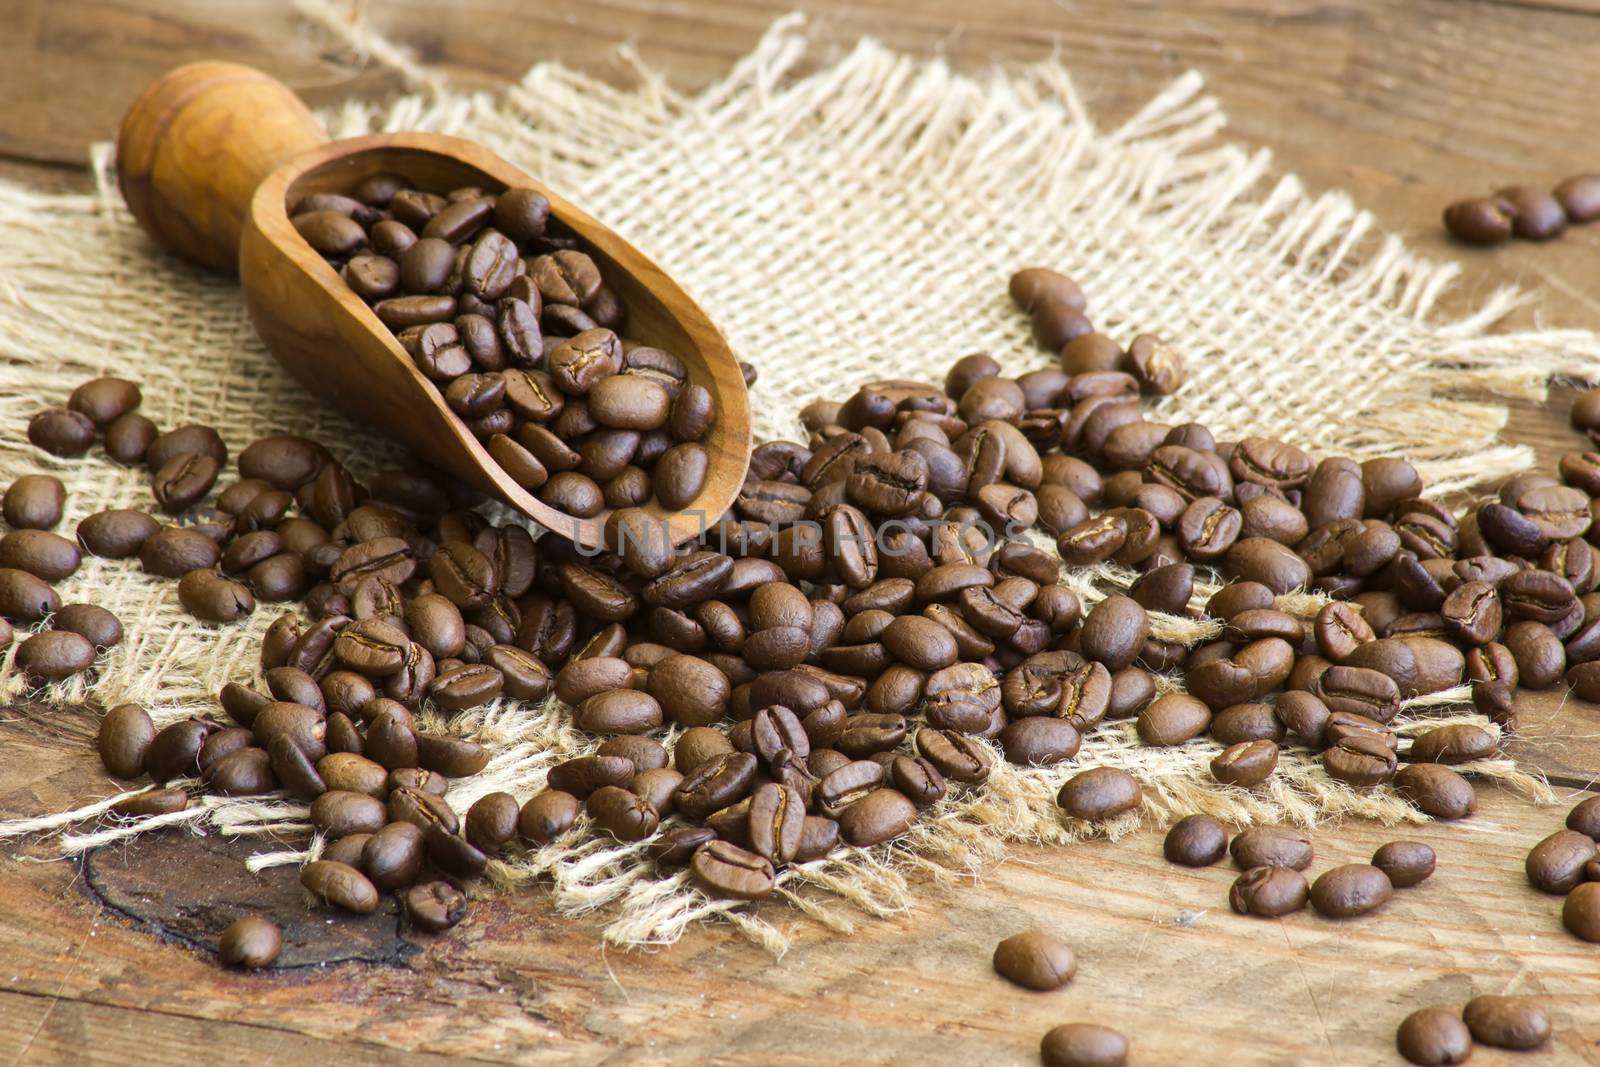 Coffee beans in wooden scoop